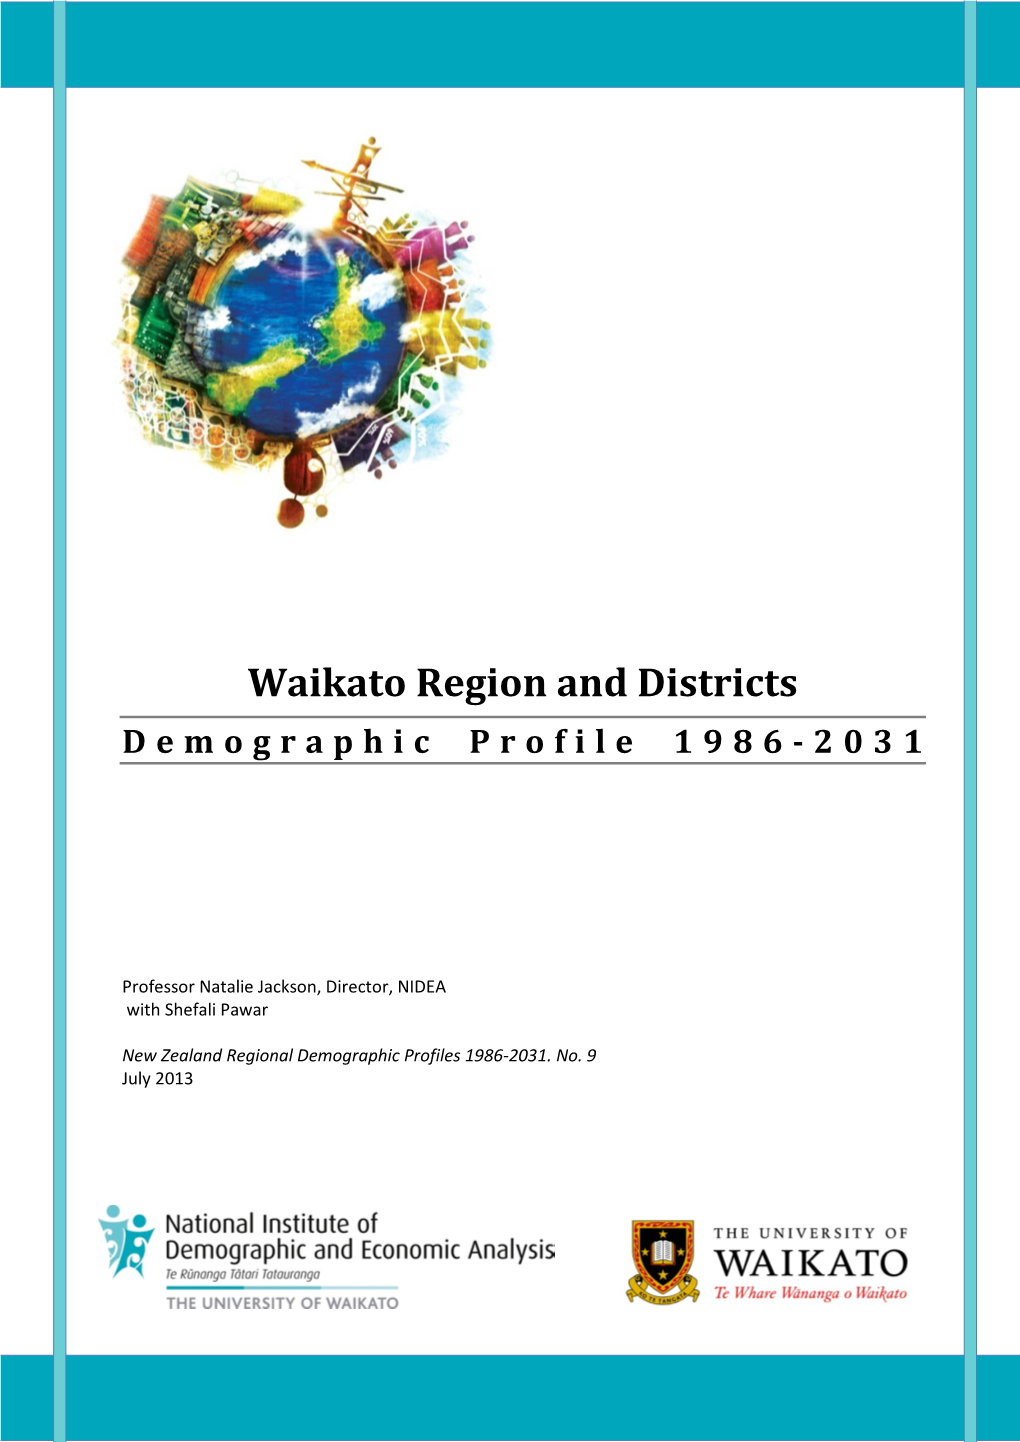 Waikato Region and Districts: Demographic Profile 1986-2031